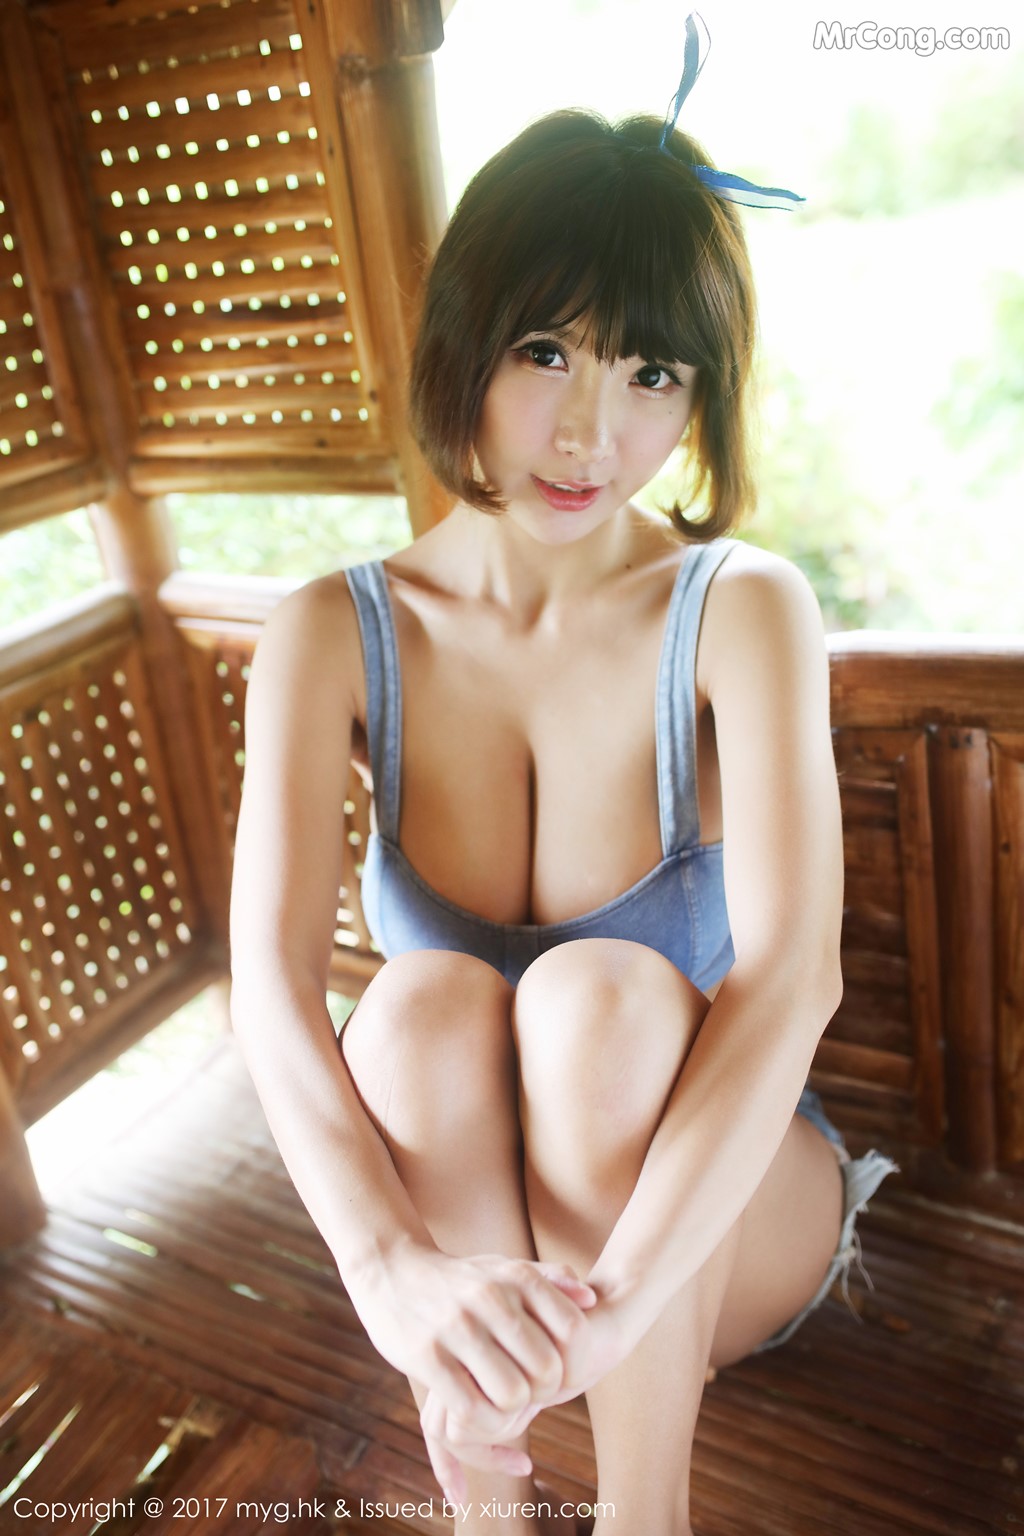 MyGirl Vol. 6262: Sunny&#39;s model (晓 茜) (75 photos) photo 2-1